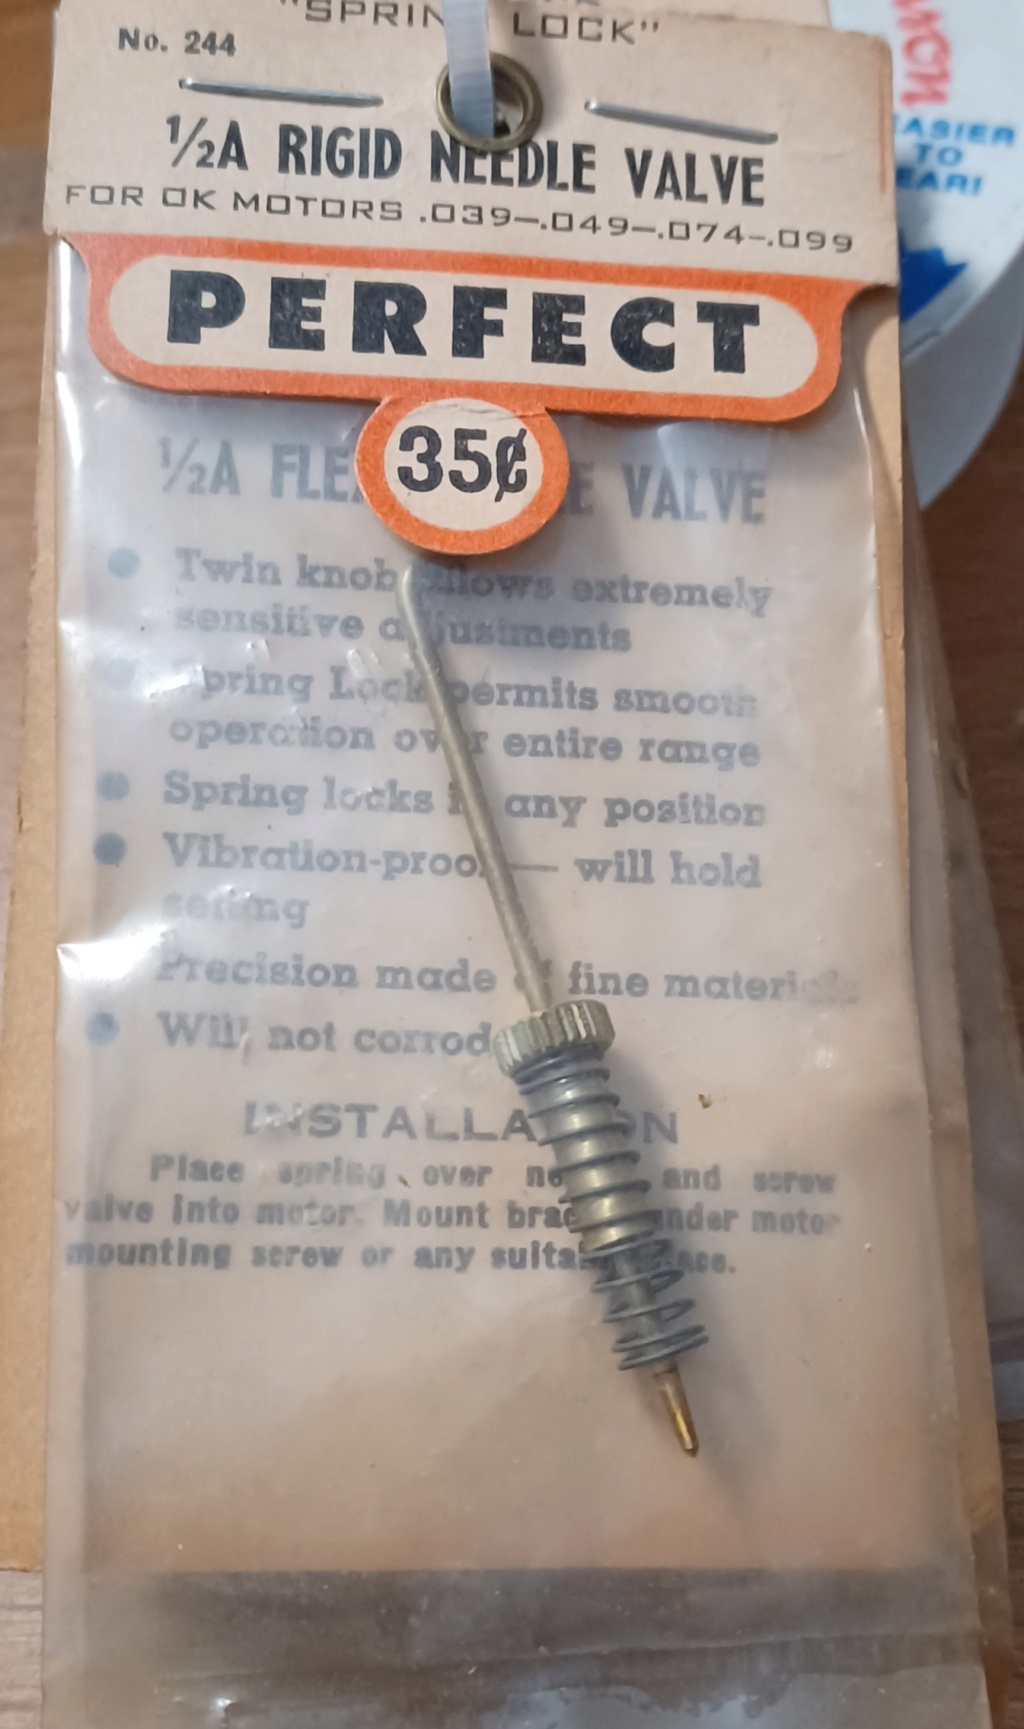   Perfect Brand Replacement Needle Valves Perfec11